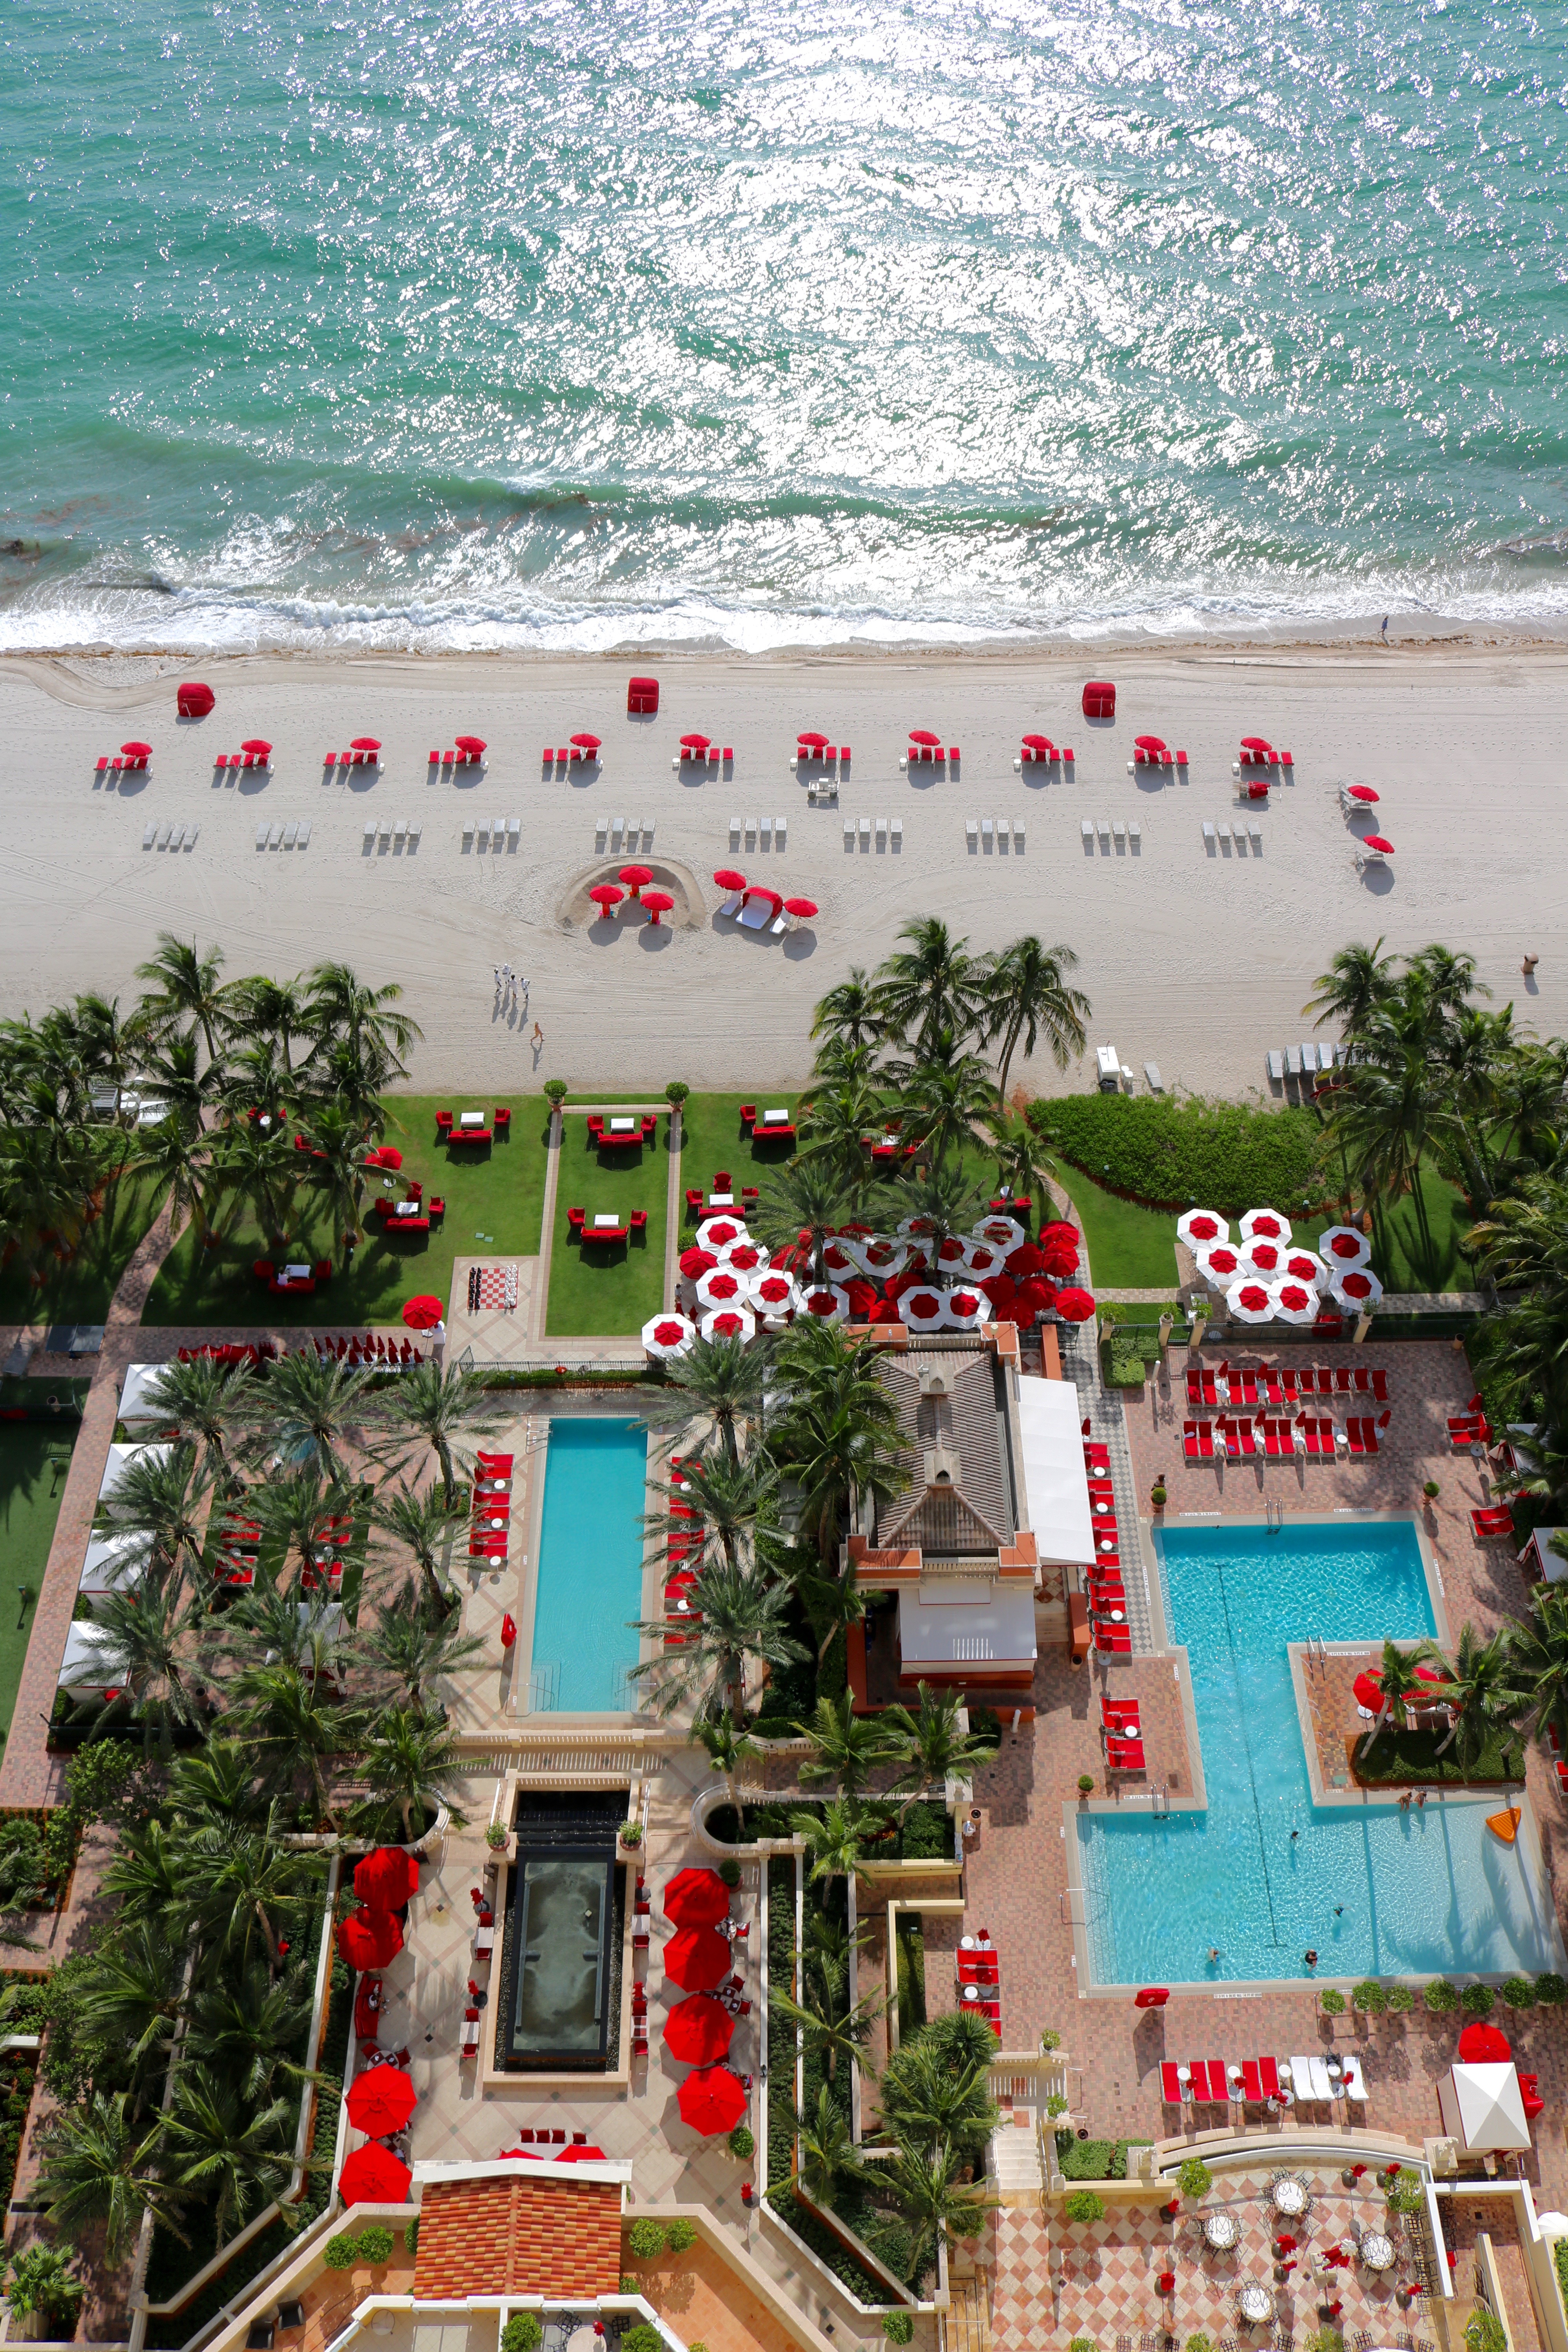 Acqualina Resort & Spa, Sunny Isles Beach Florida - The Luxury Lifestyle Magazine